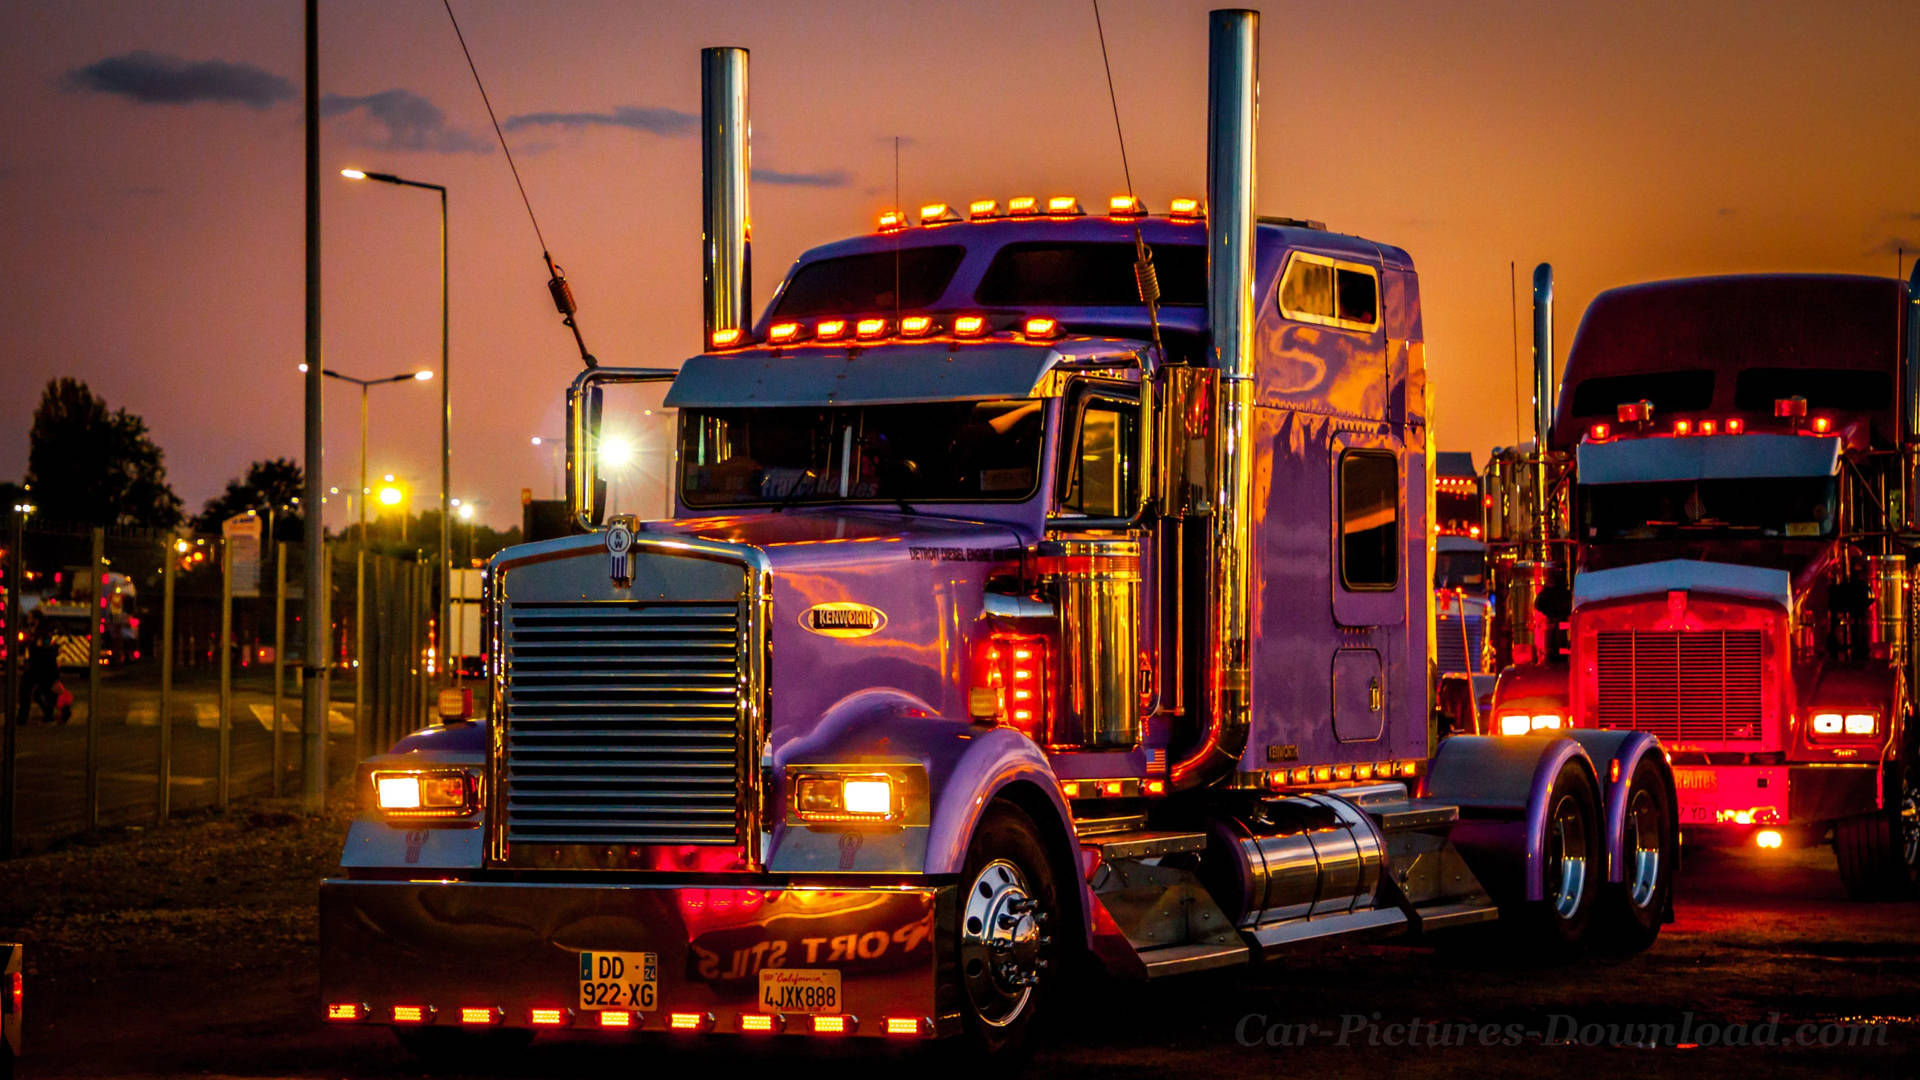 colorful cool truck at night doe9201p40evzkla